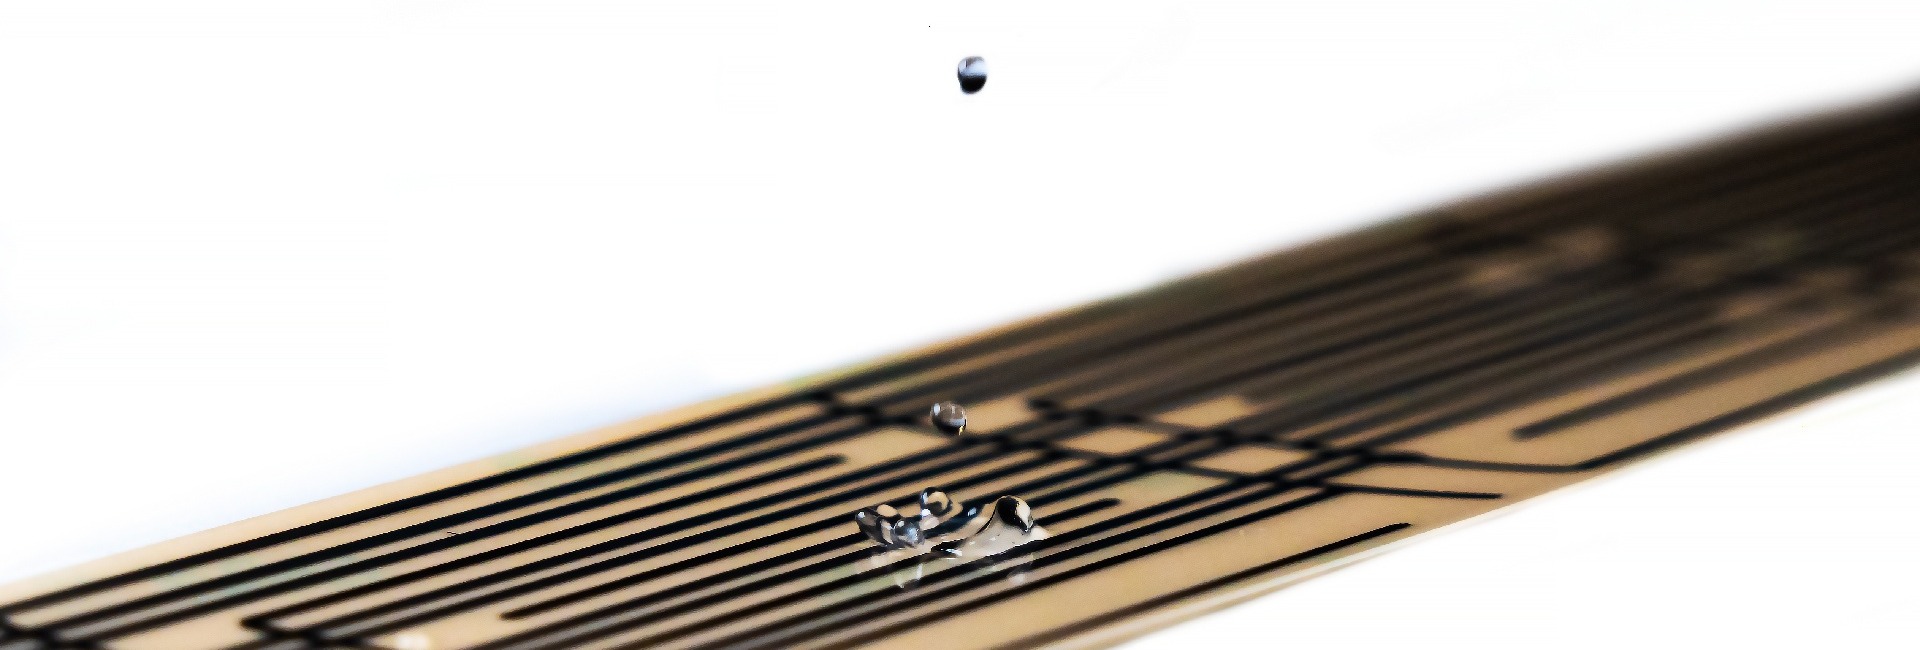 A droplet on LAIIER's Severn sensor